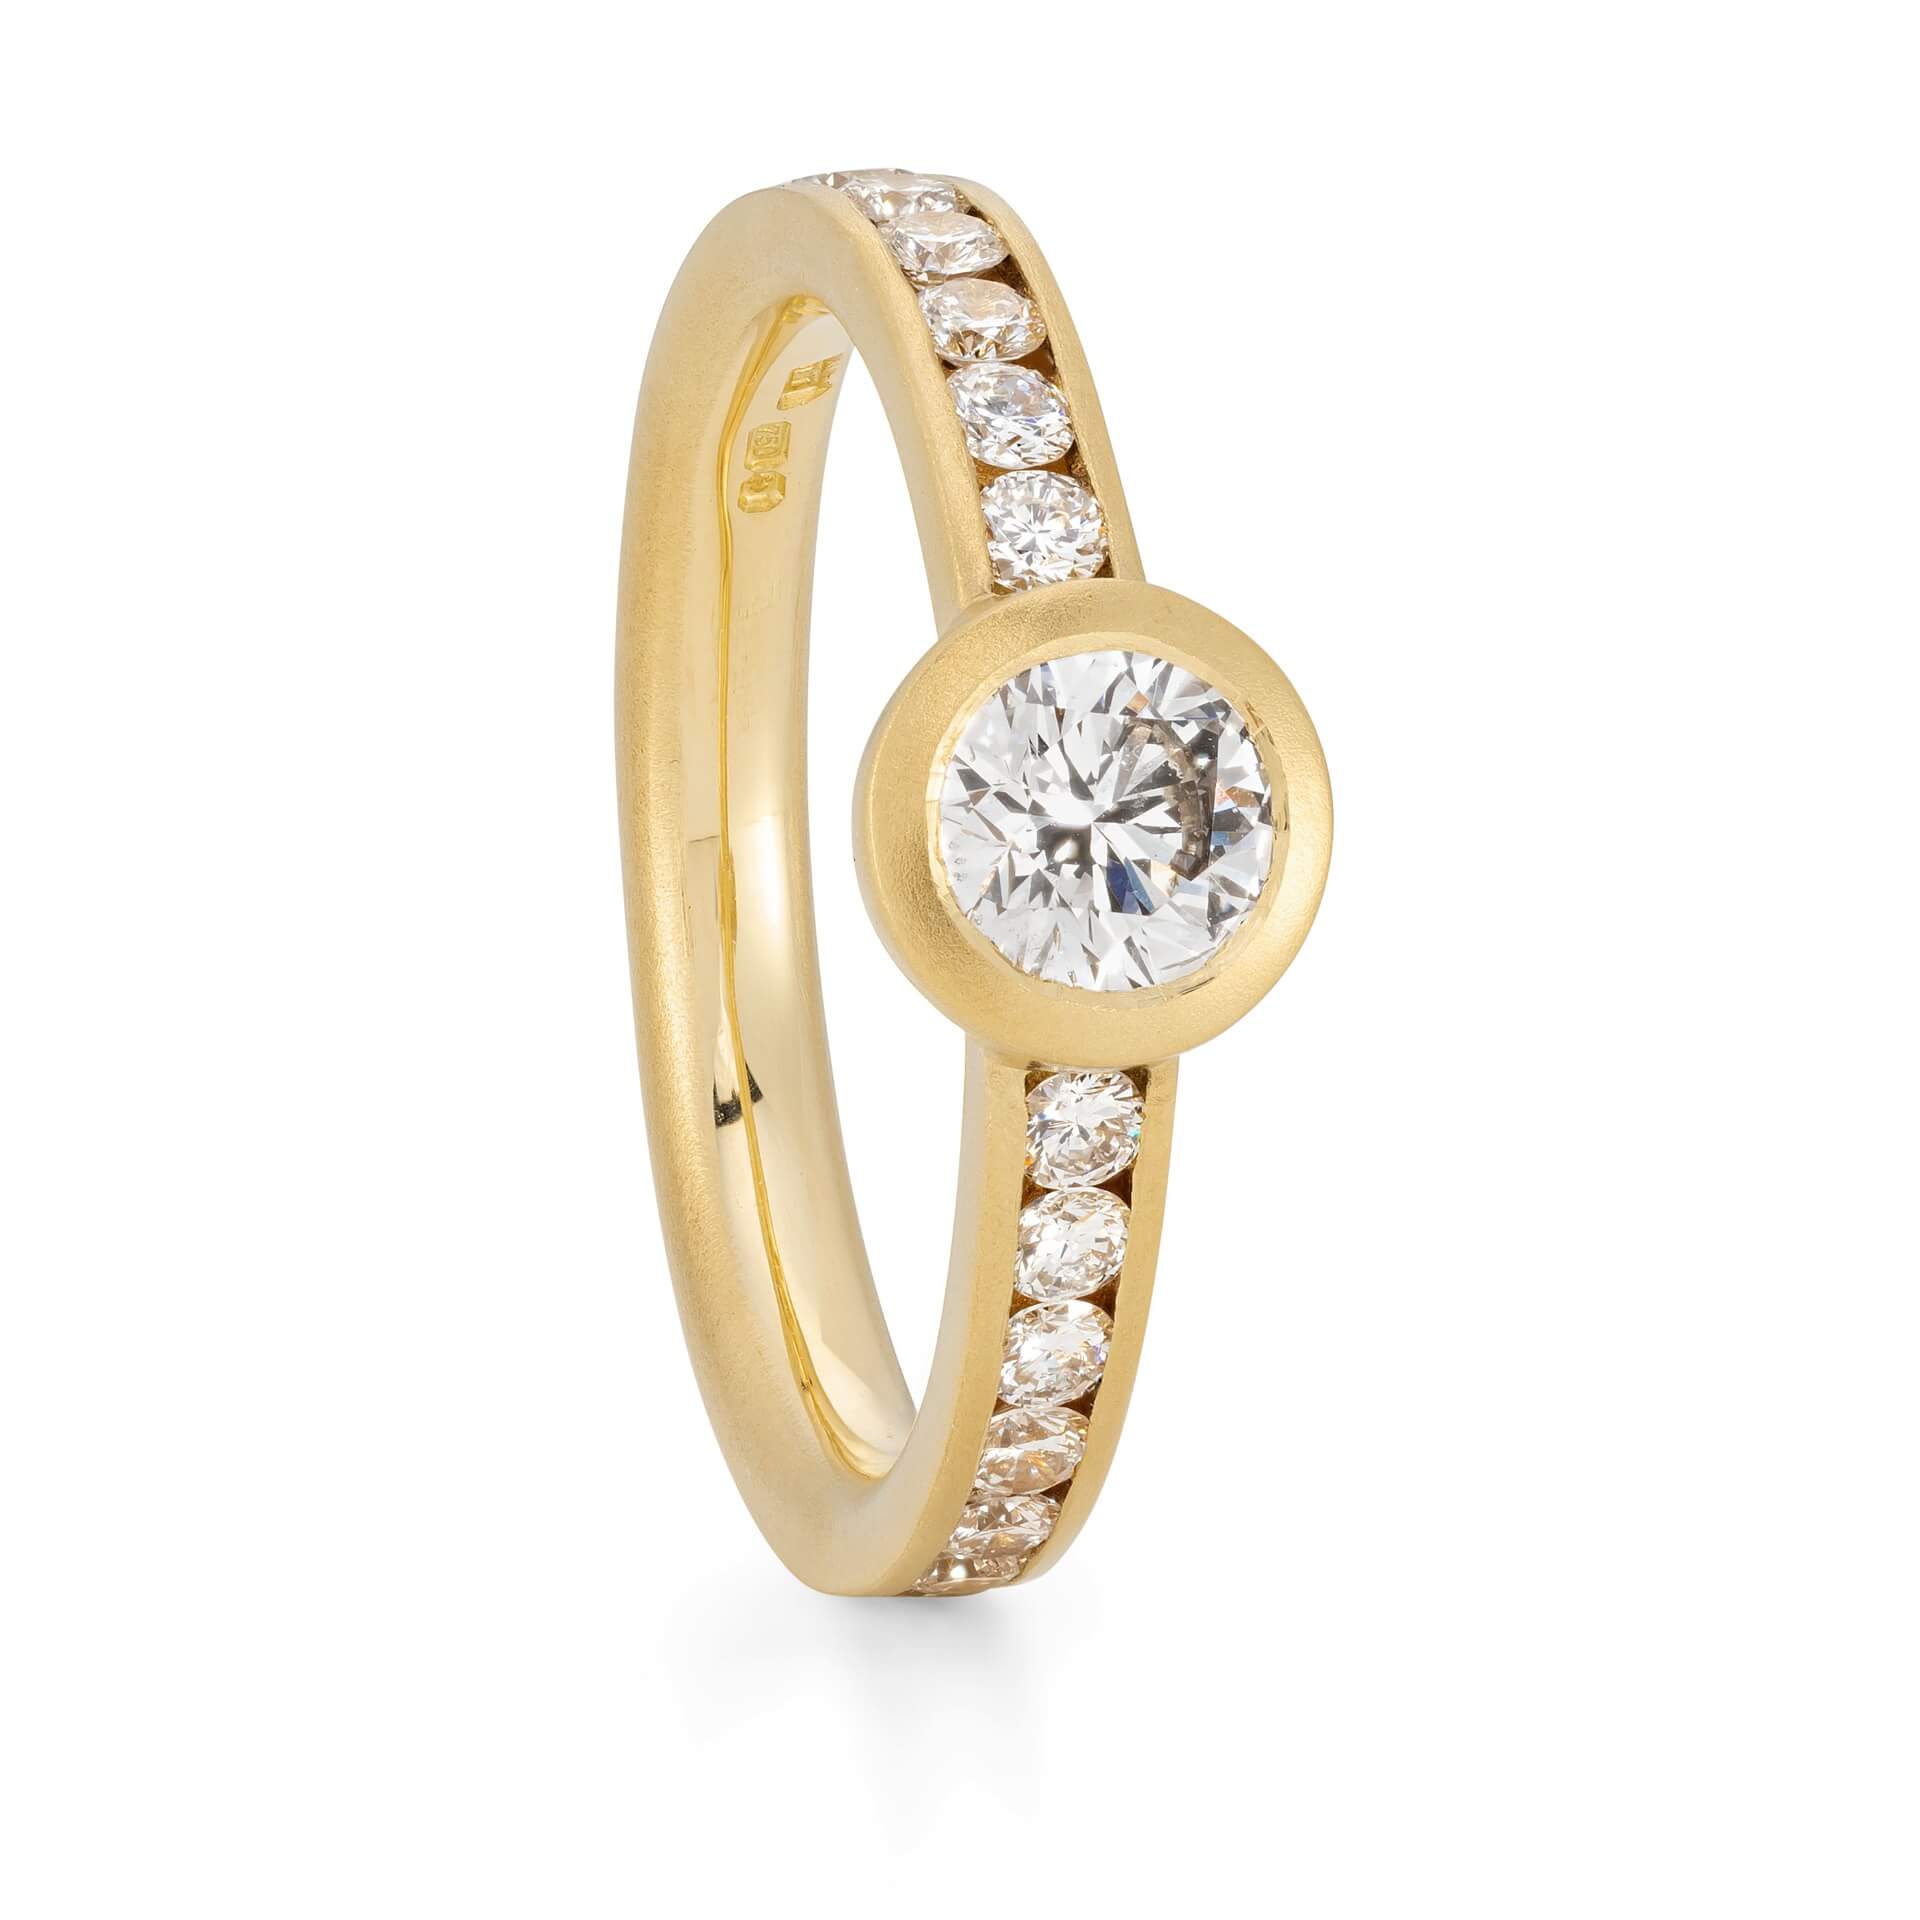 Gold diamond engagement ring by Jacks Turner